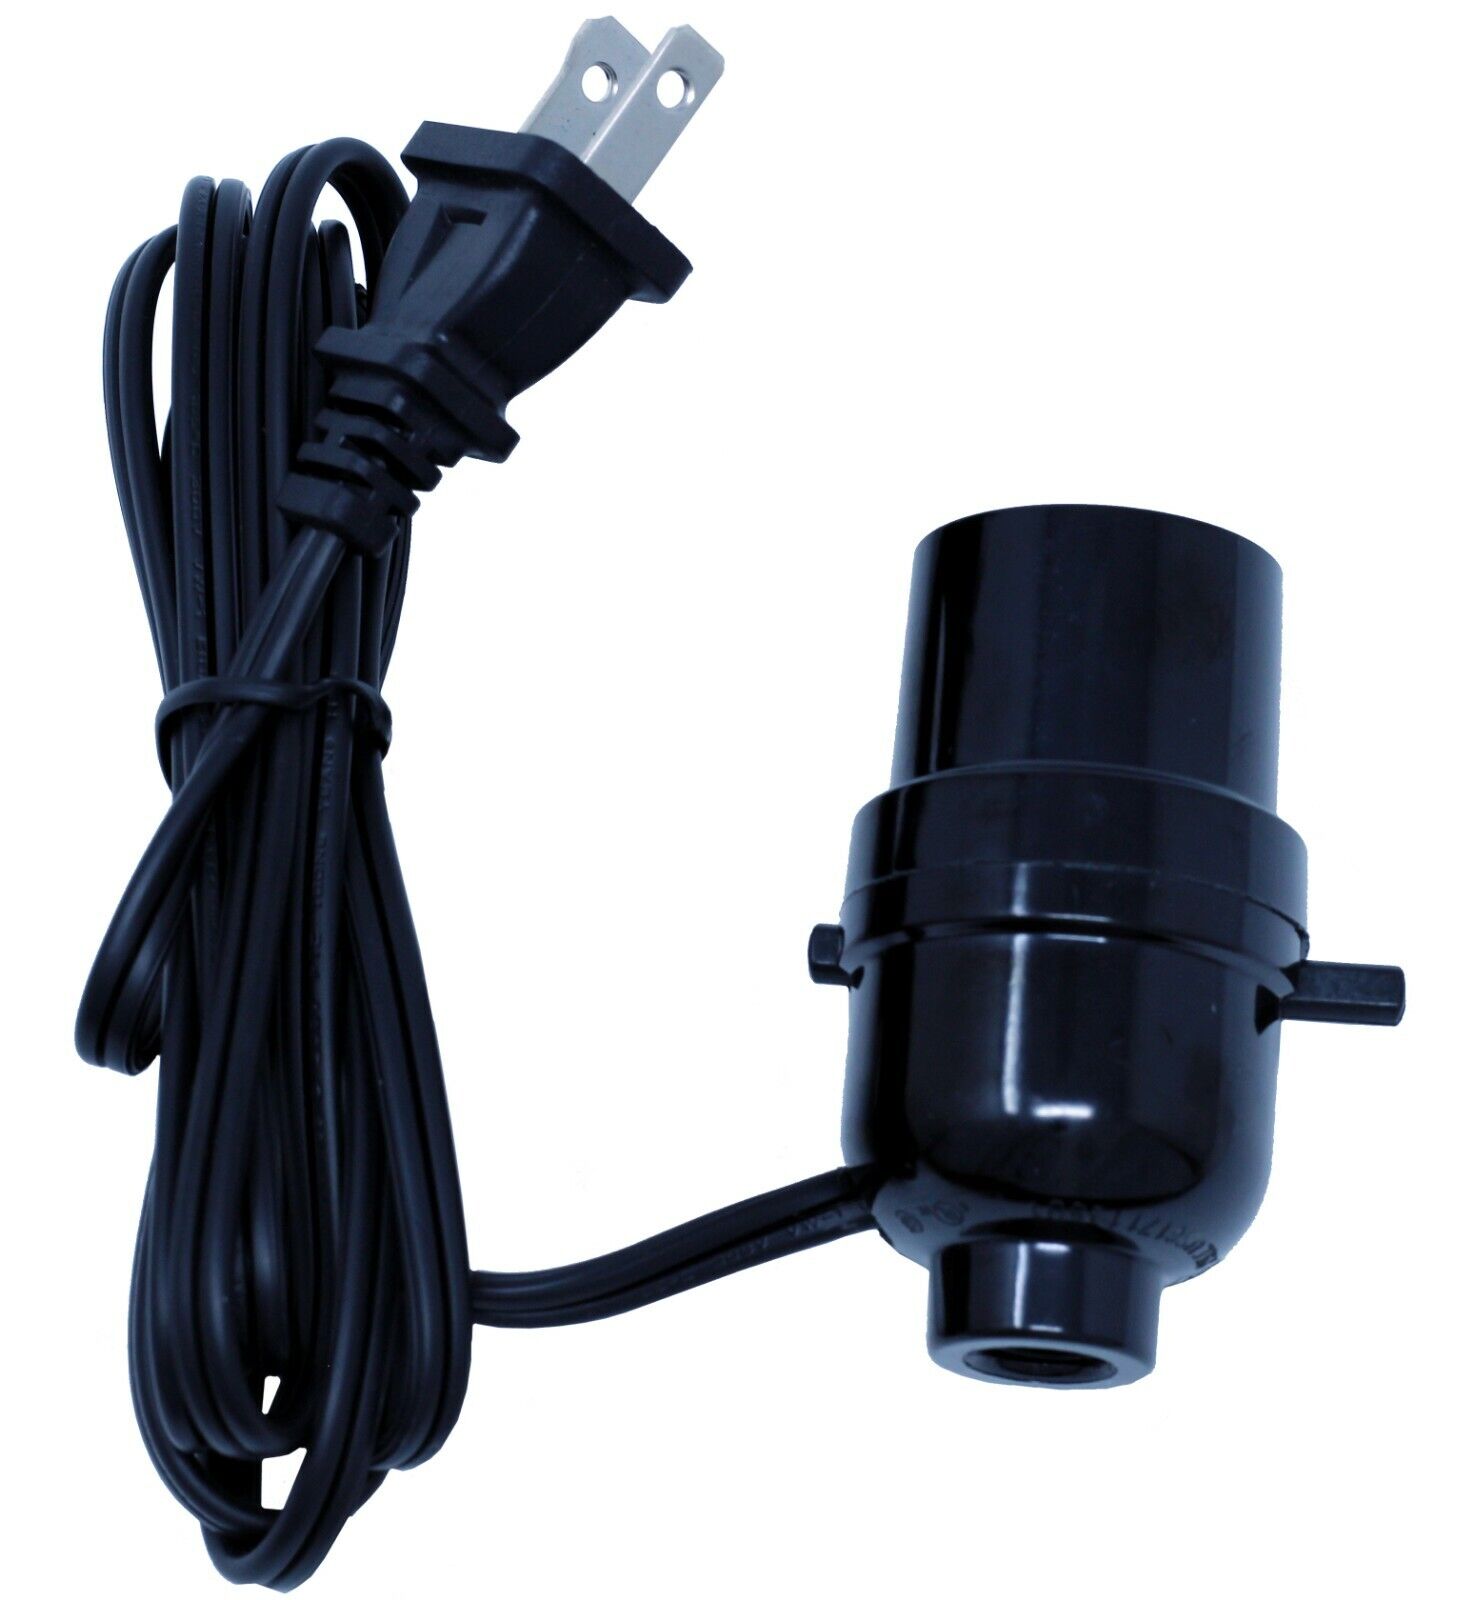 Creative Hobbies M995K Instant Lamp Kit - Black Lamp Socket Wired to Black Cord